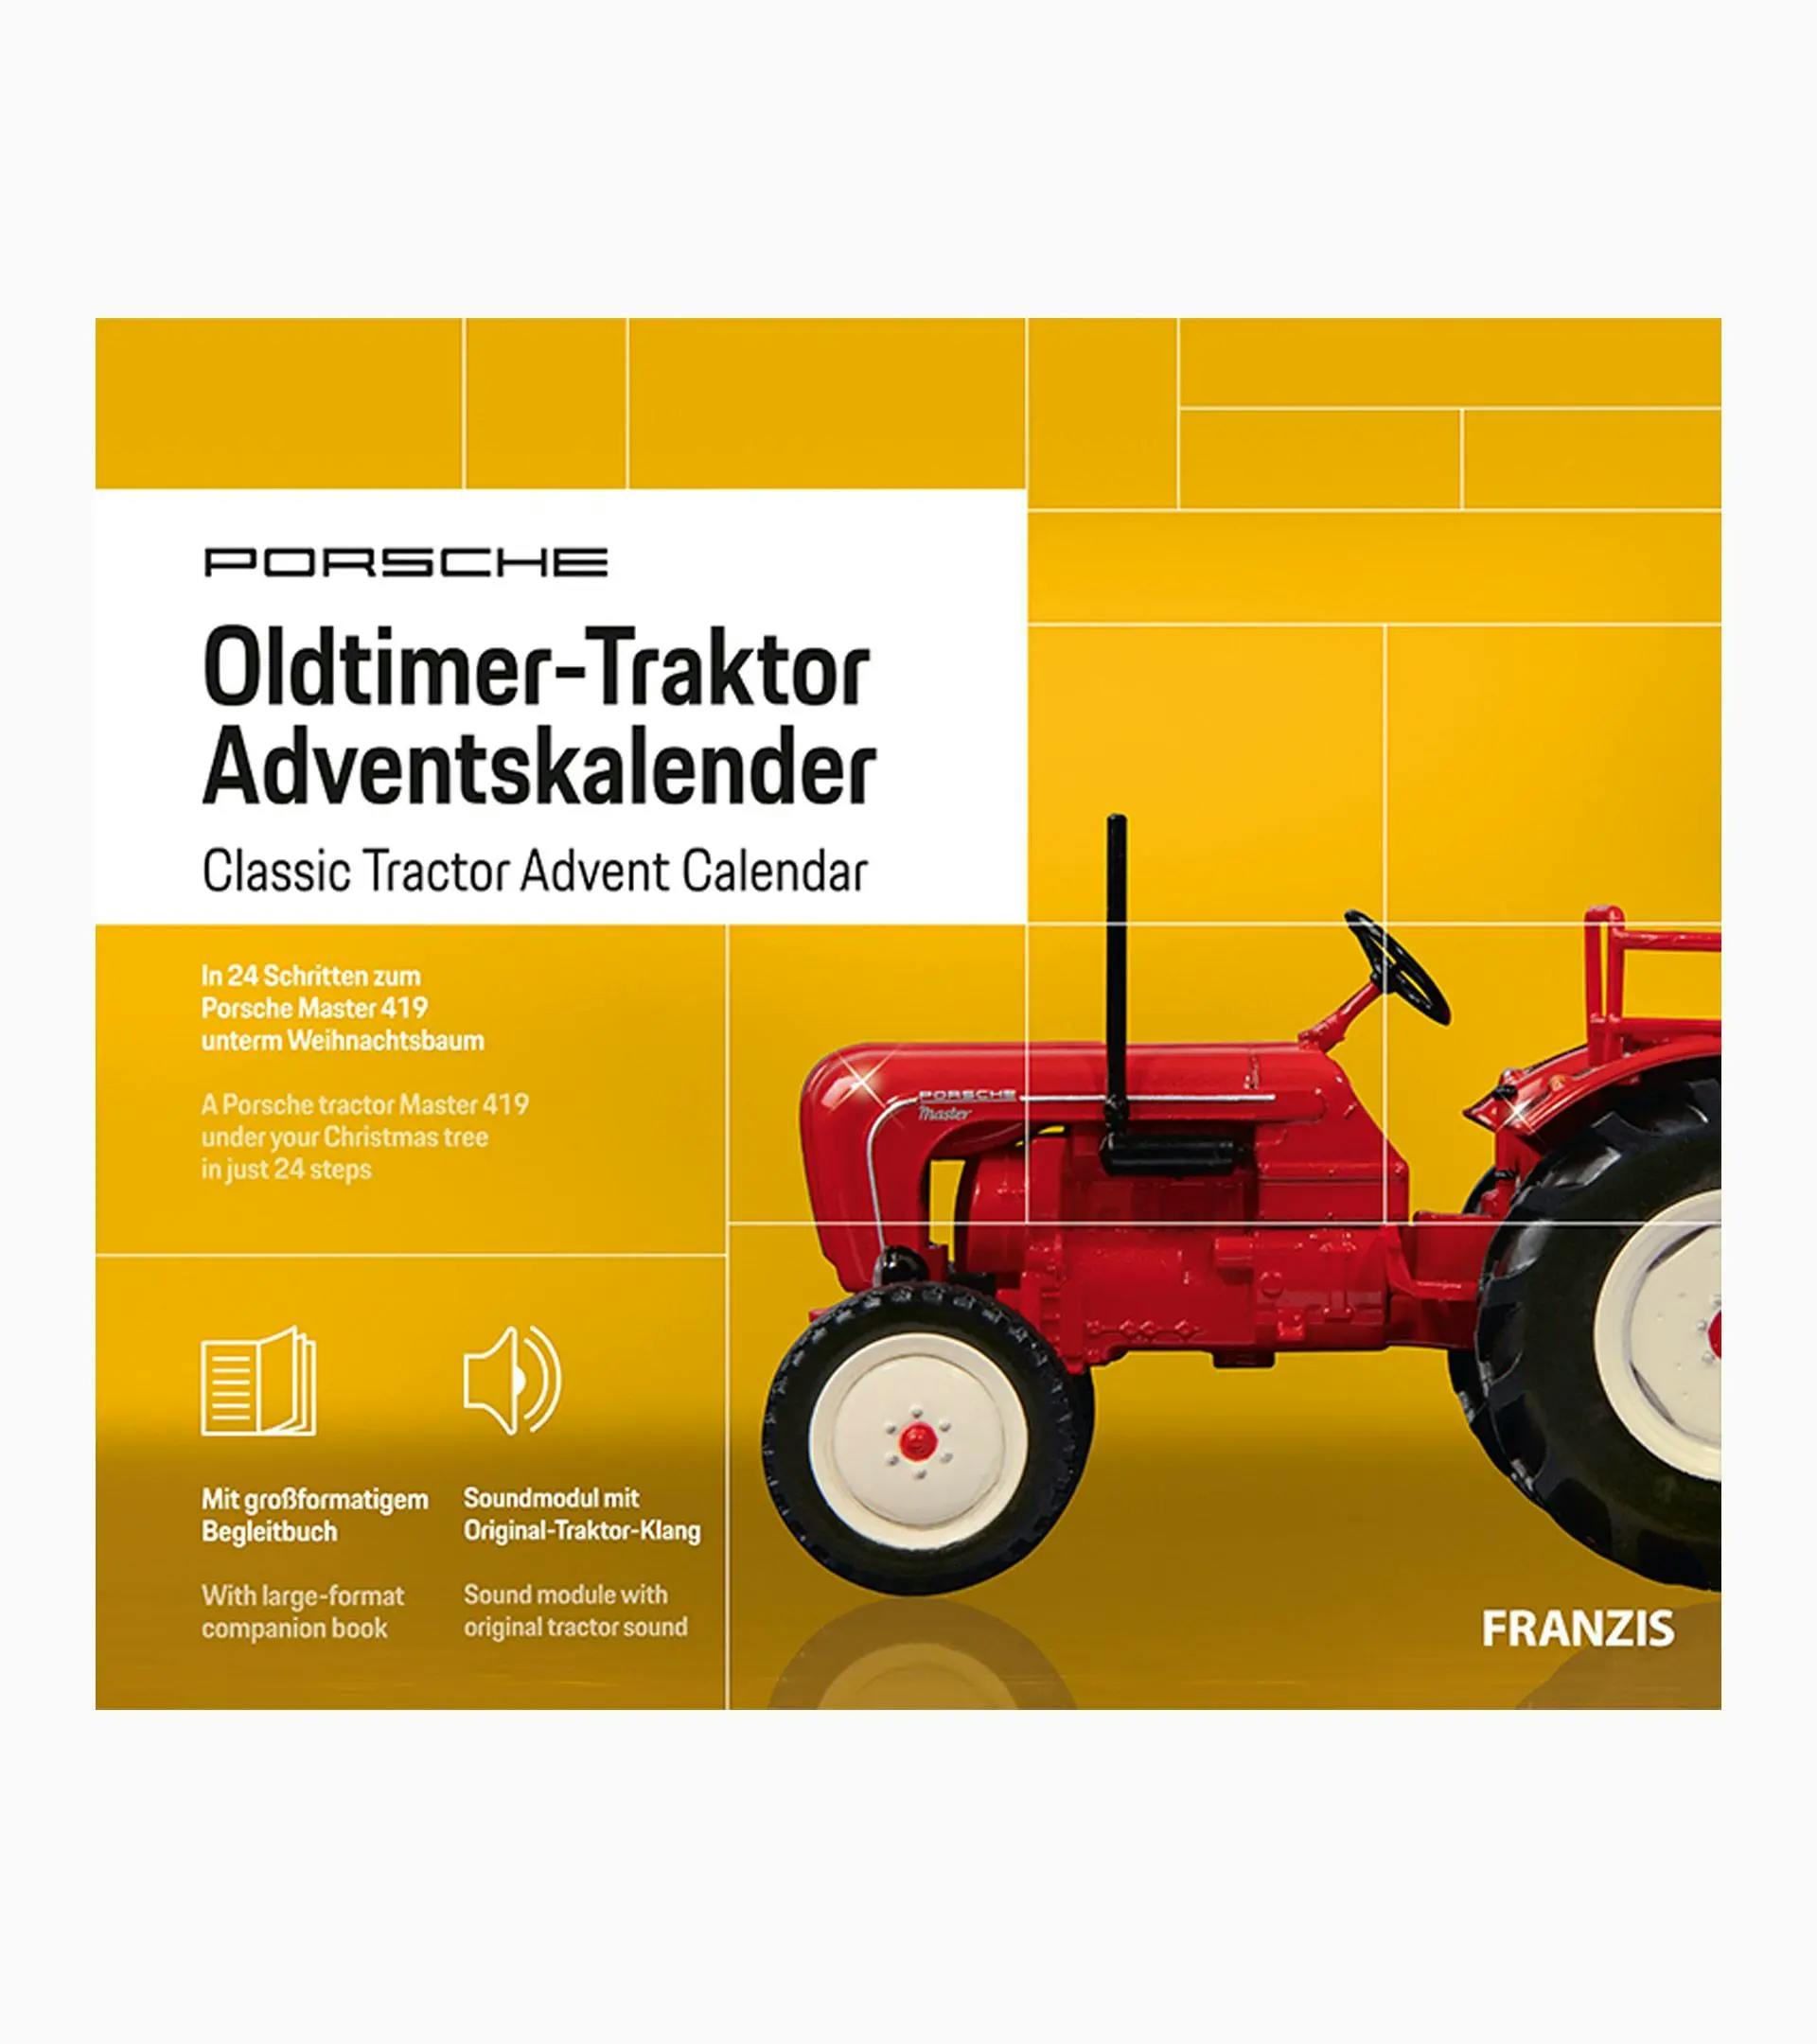 Porsche Oldtimer-Traktor Adventskalender 2